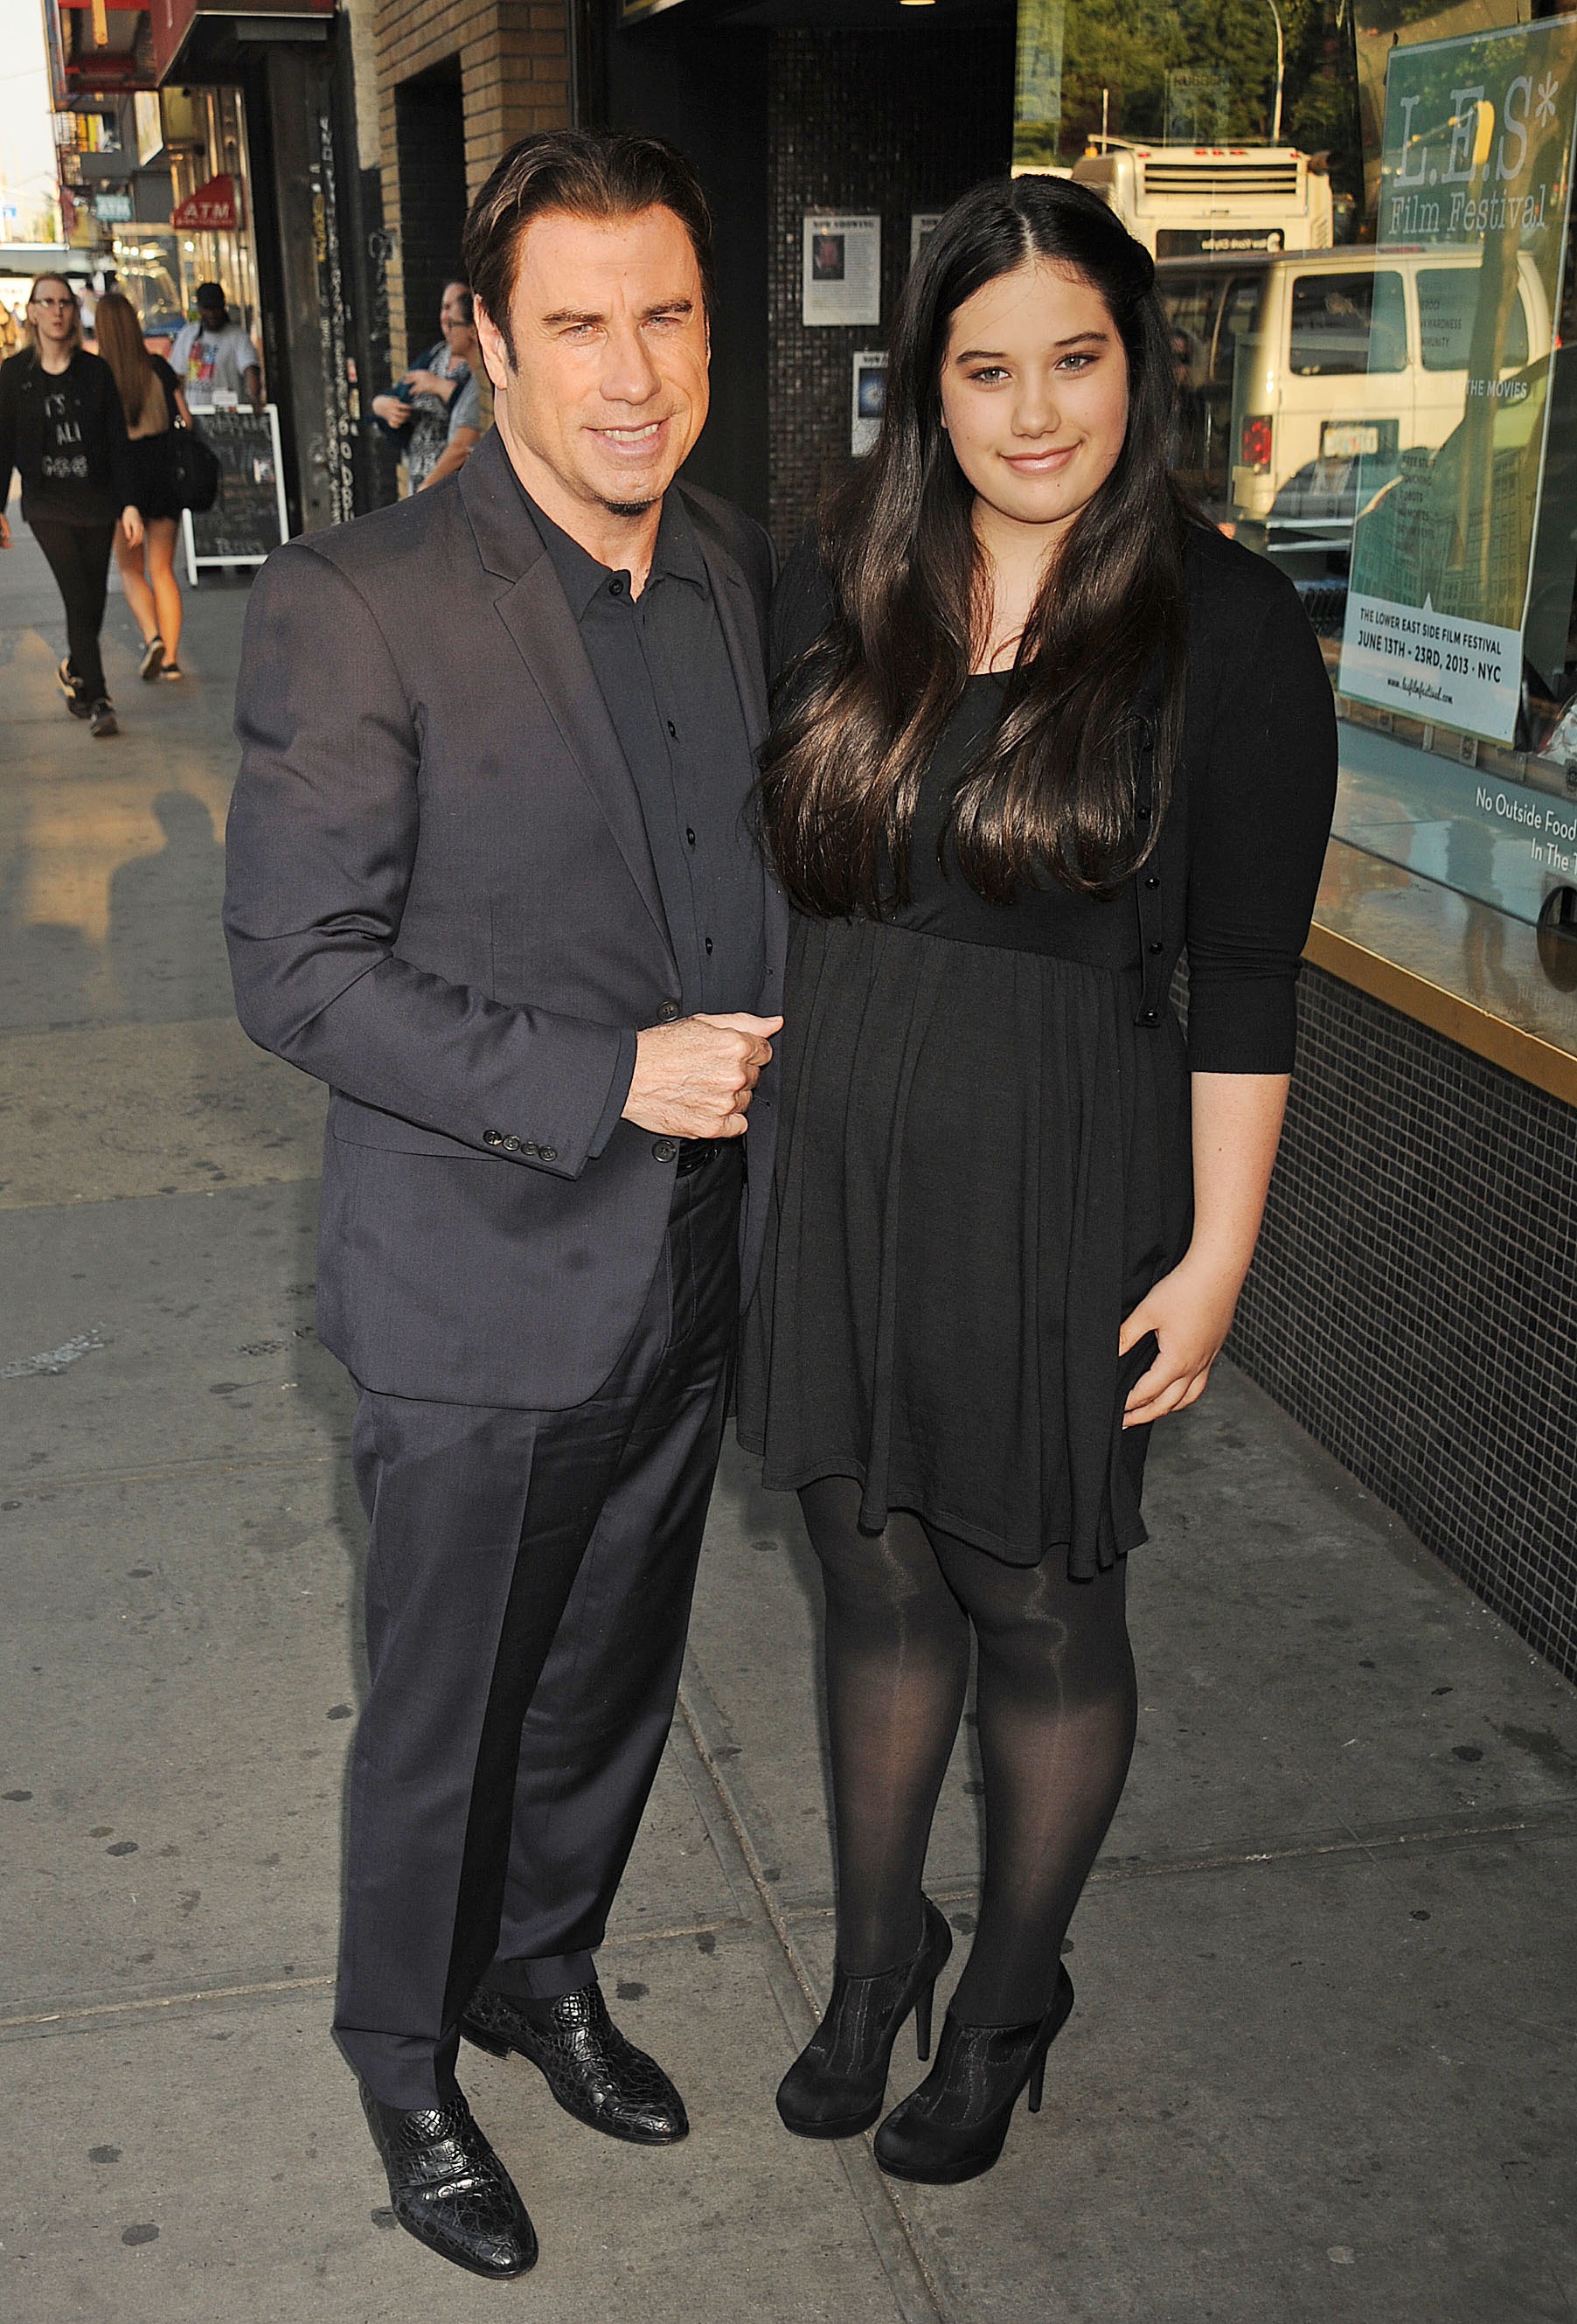 John Travolta and Ella Bleu Travolta in New York in 2013 | Source: Getty Images